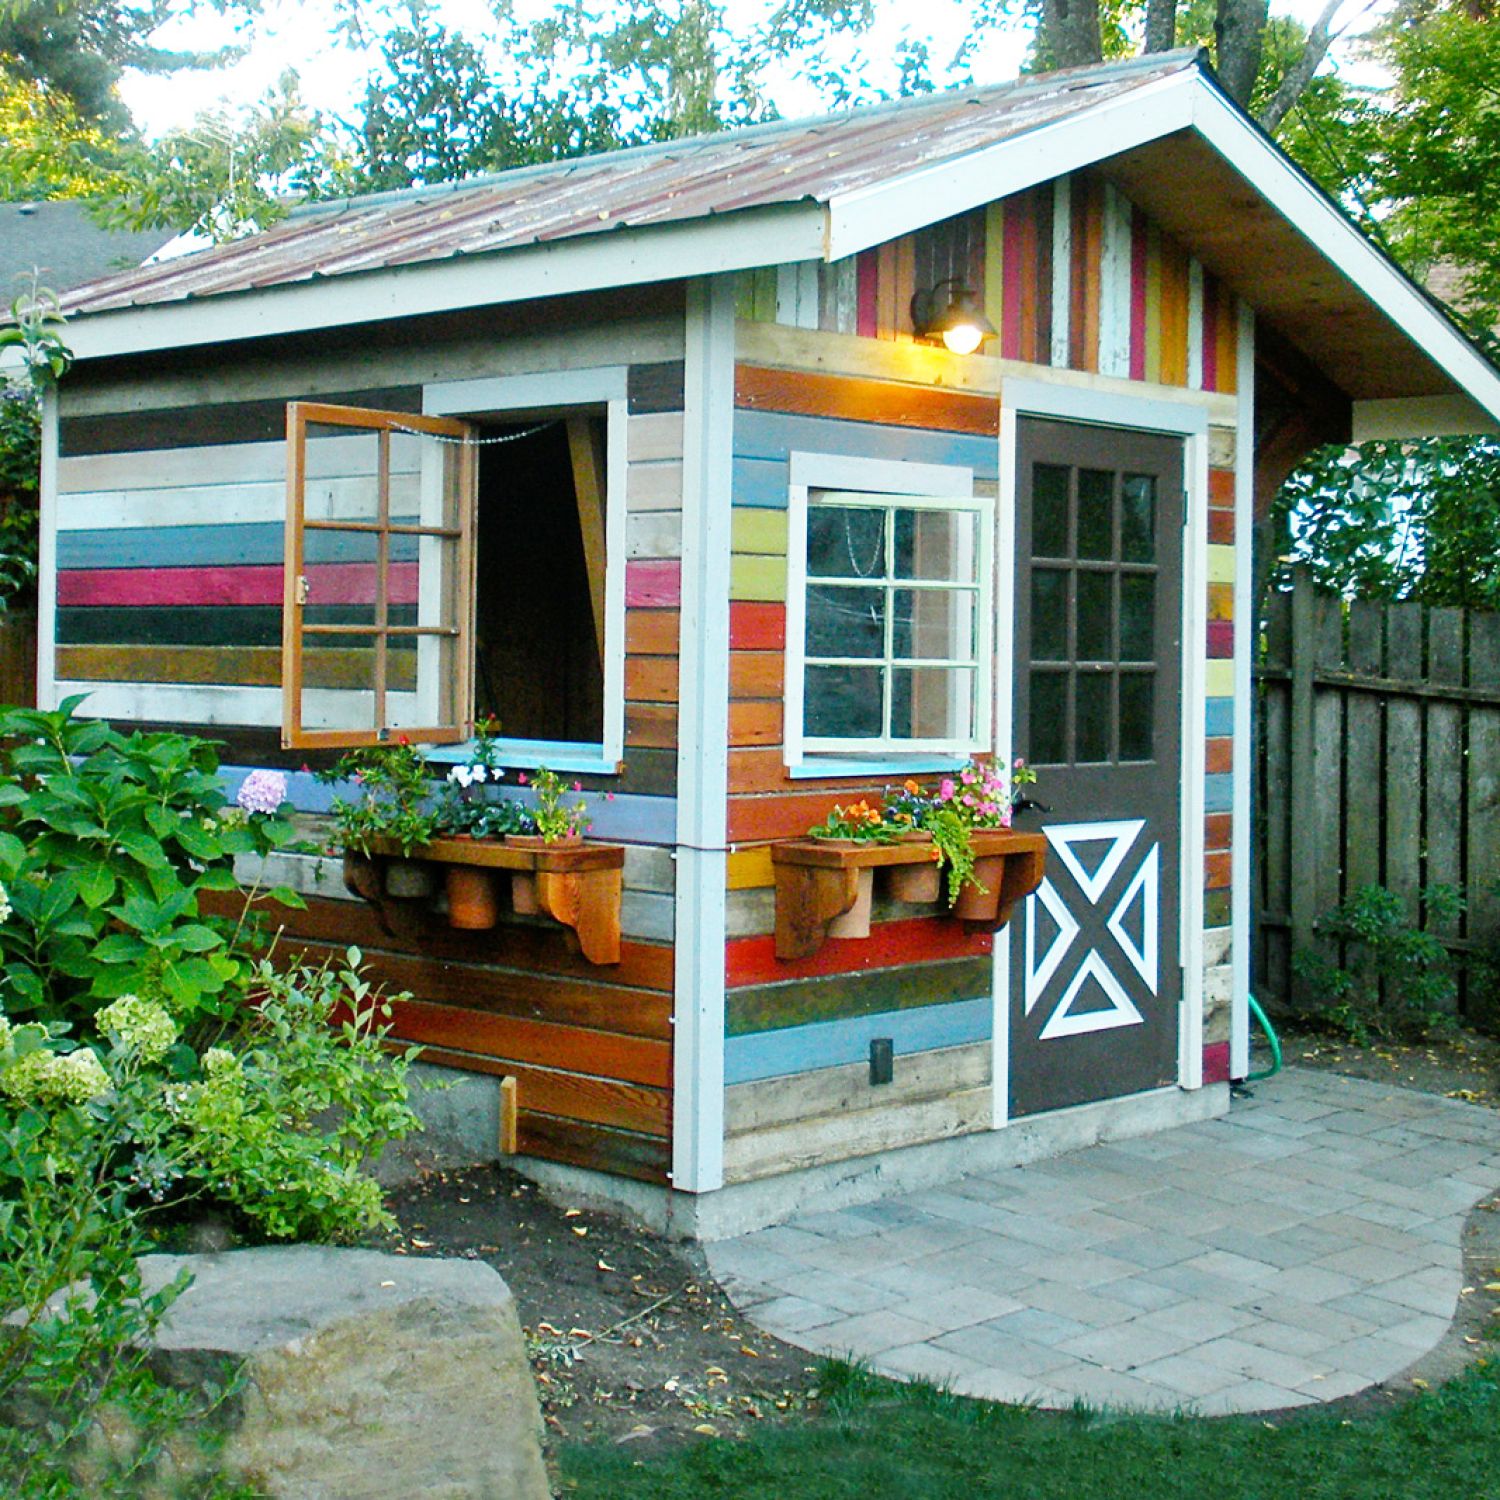 Colorful backyard shed